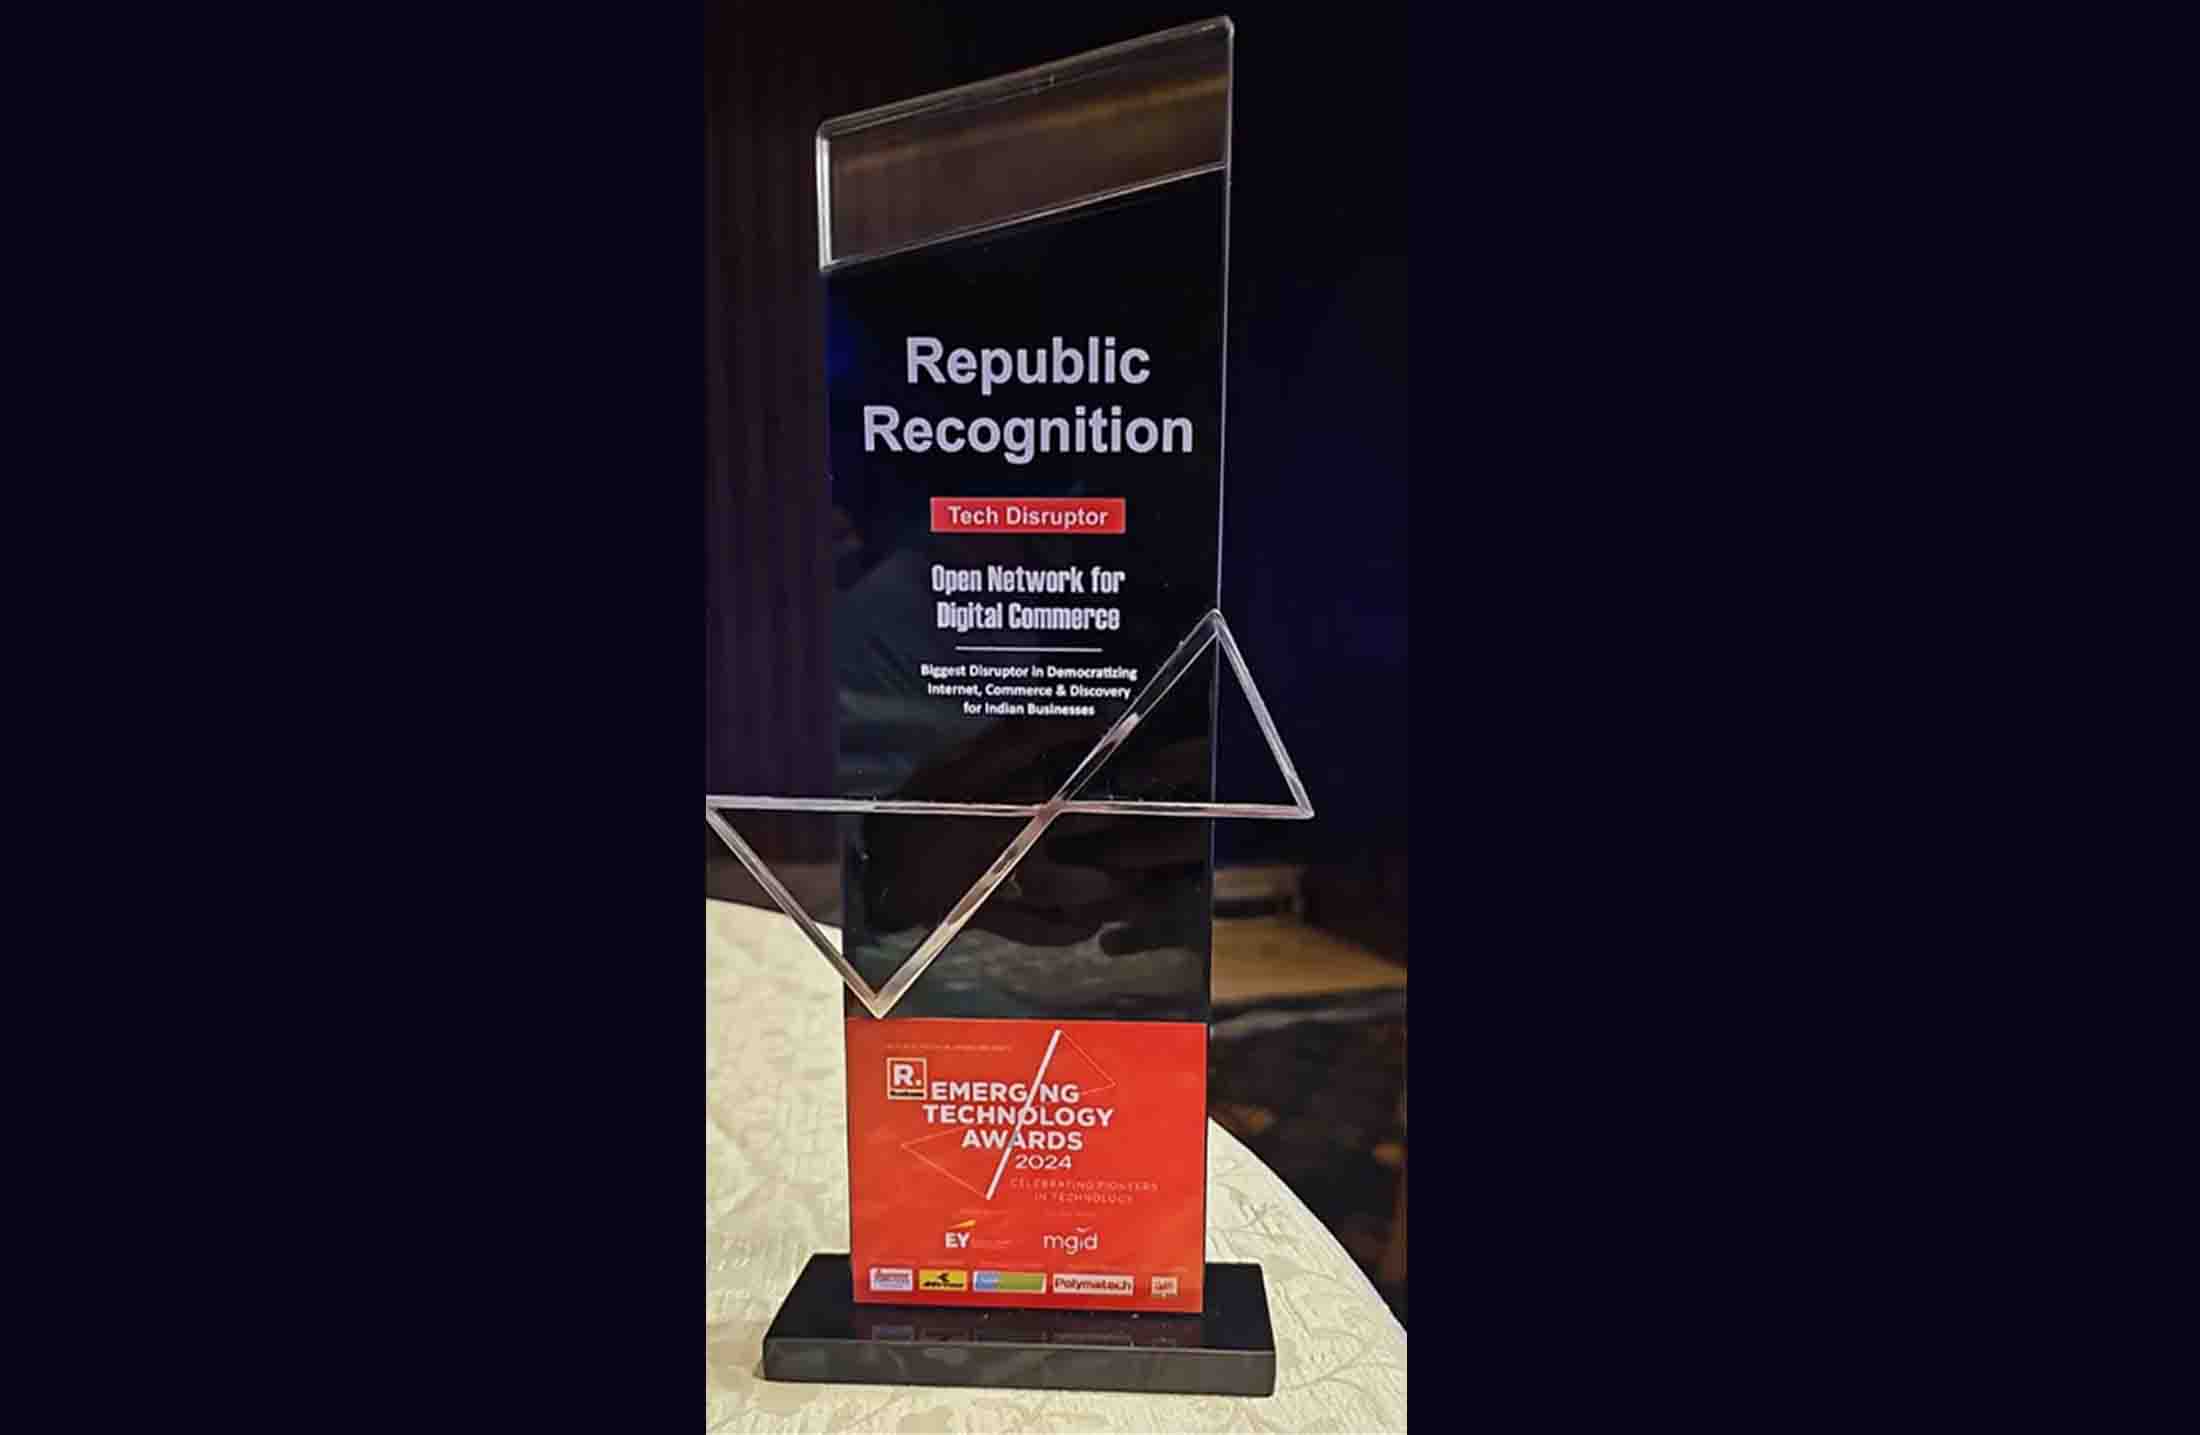 Republic Business Emerging Technology Awards